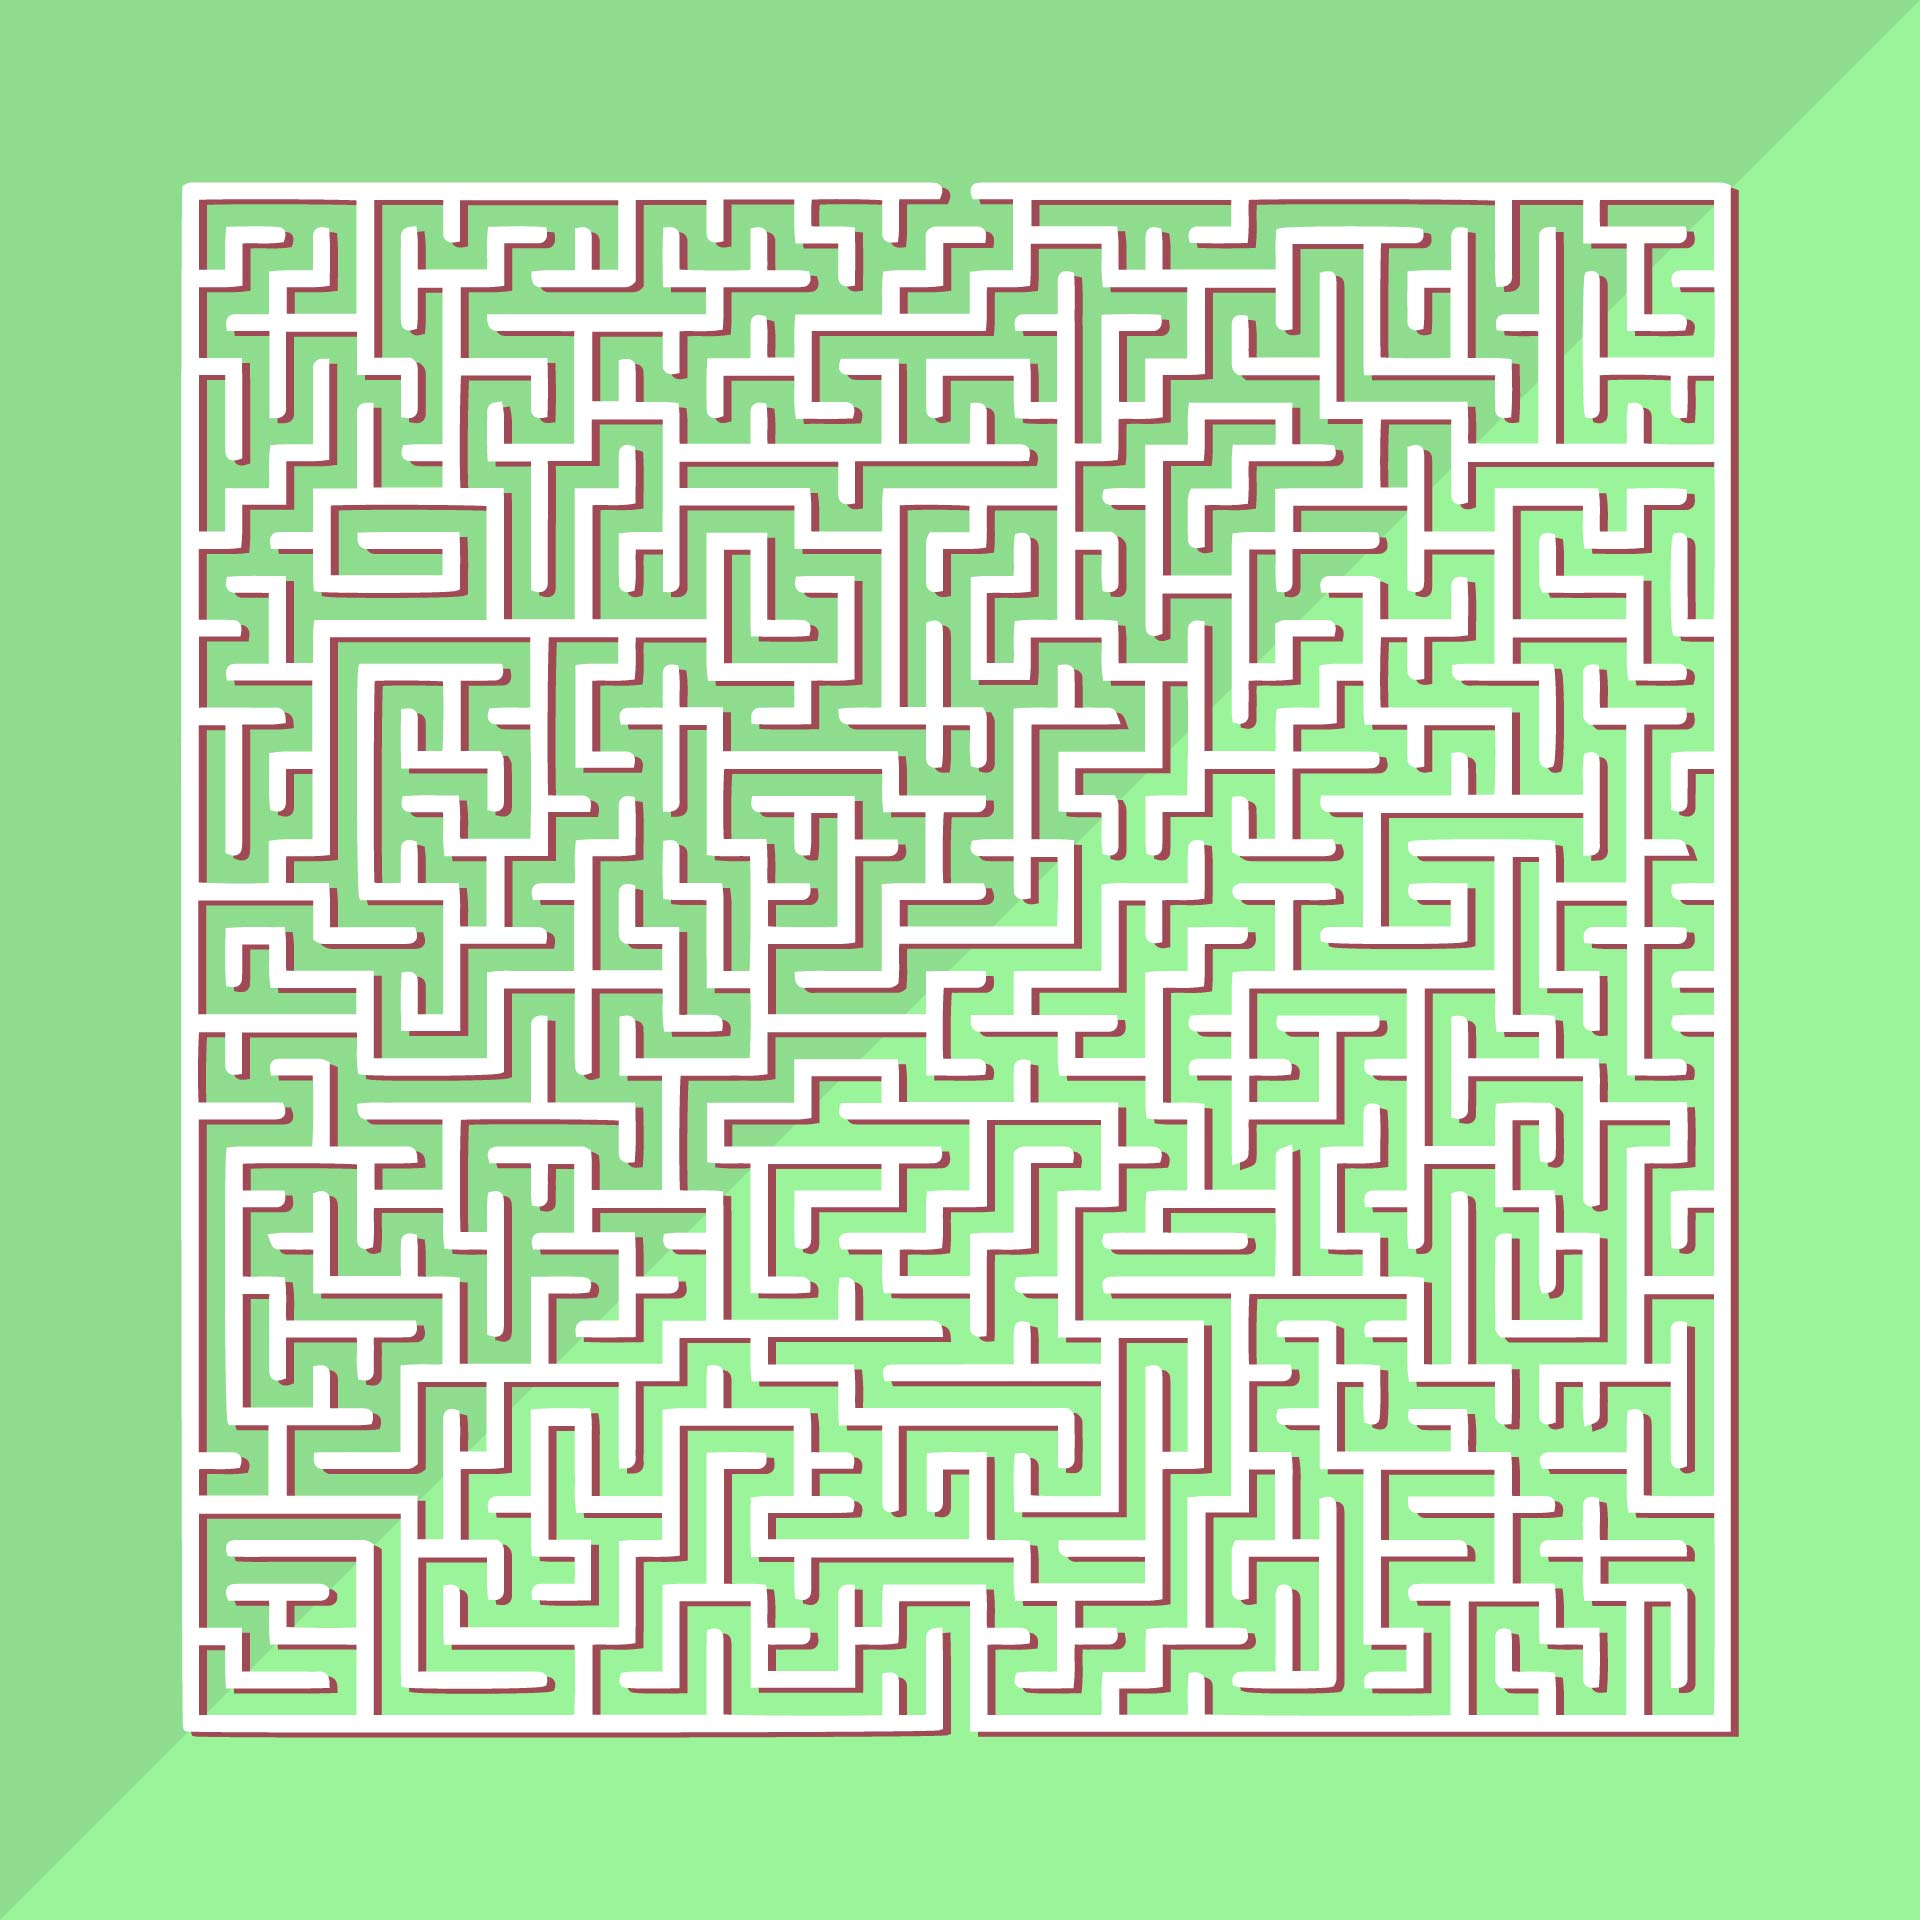 difficult-maze-printable